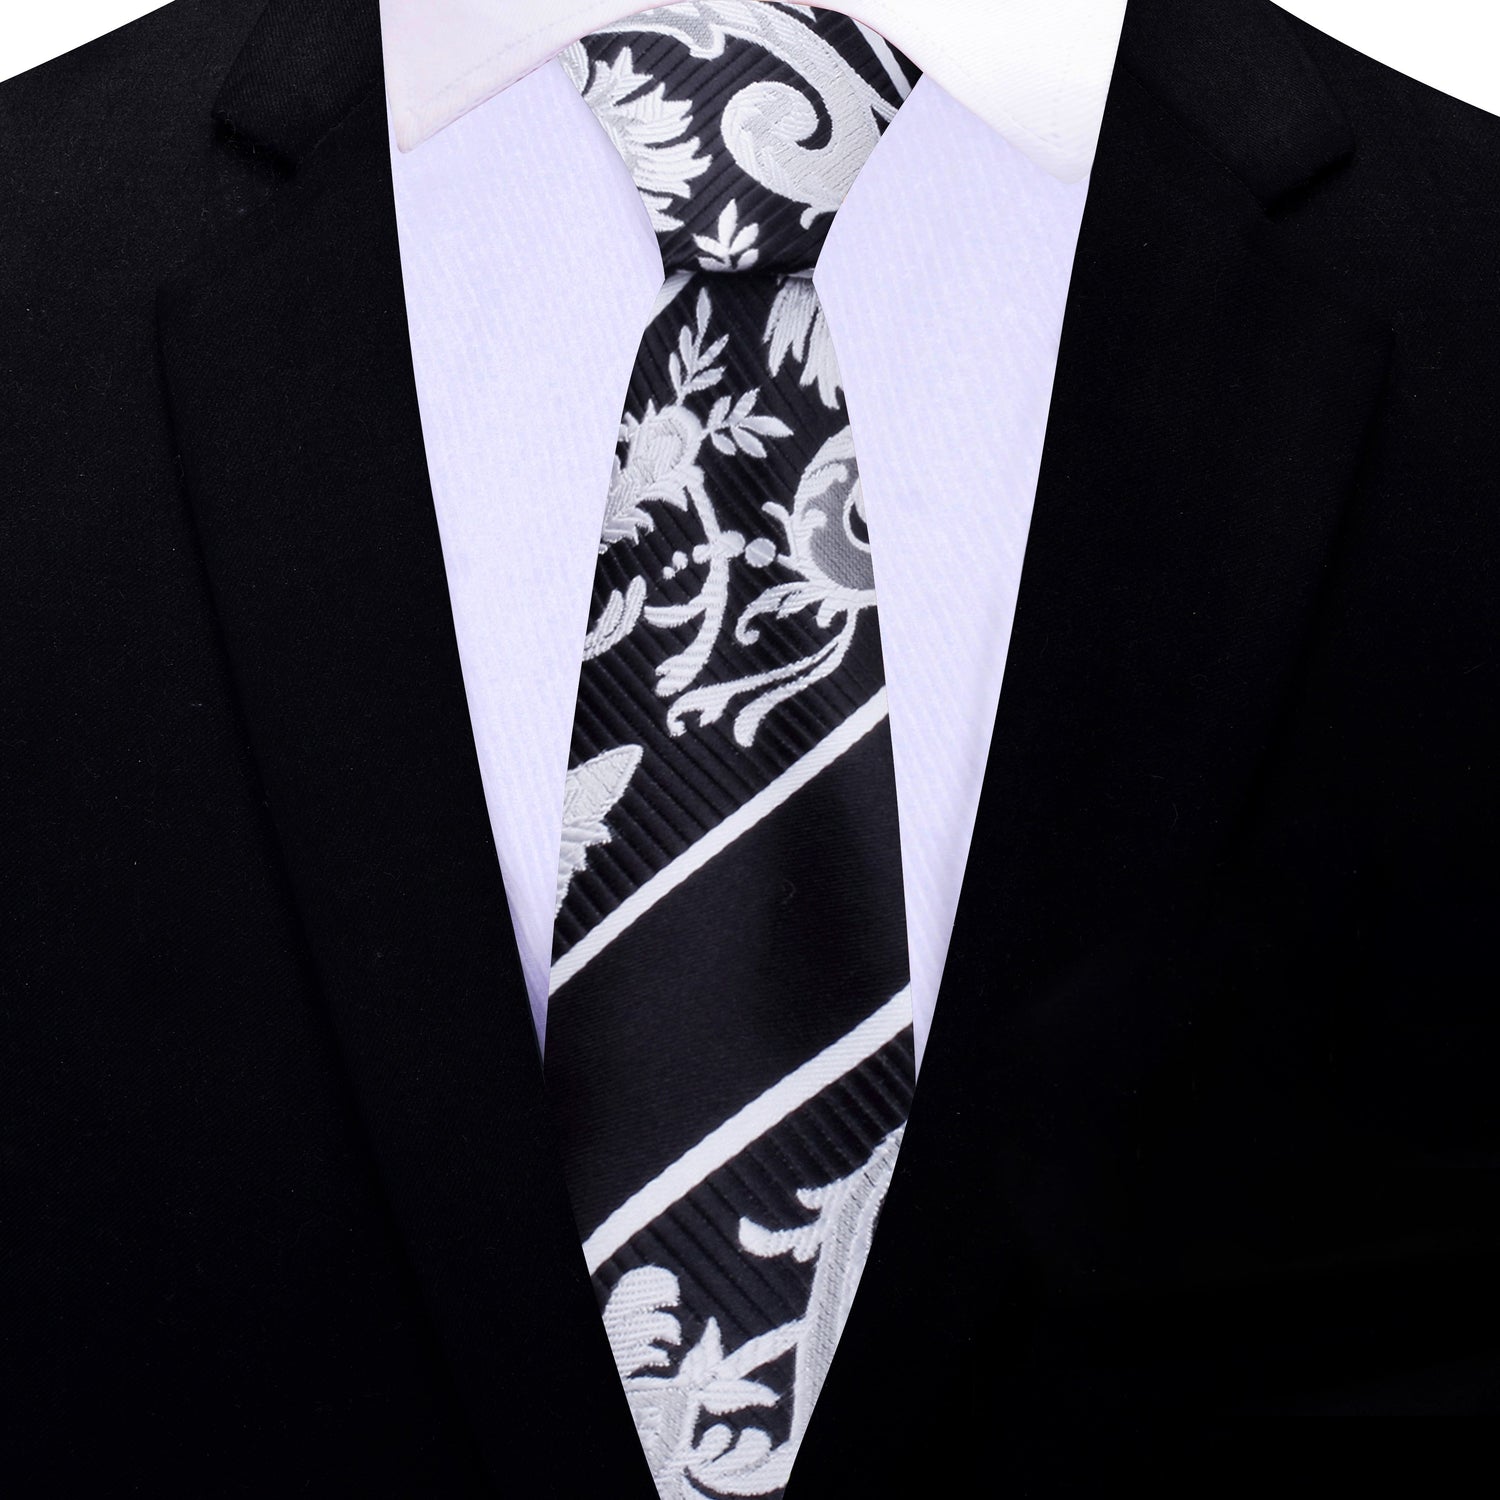 Single Thin Tie: Black, Grey, White Floral Tie  